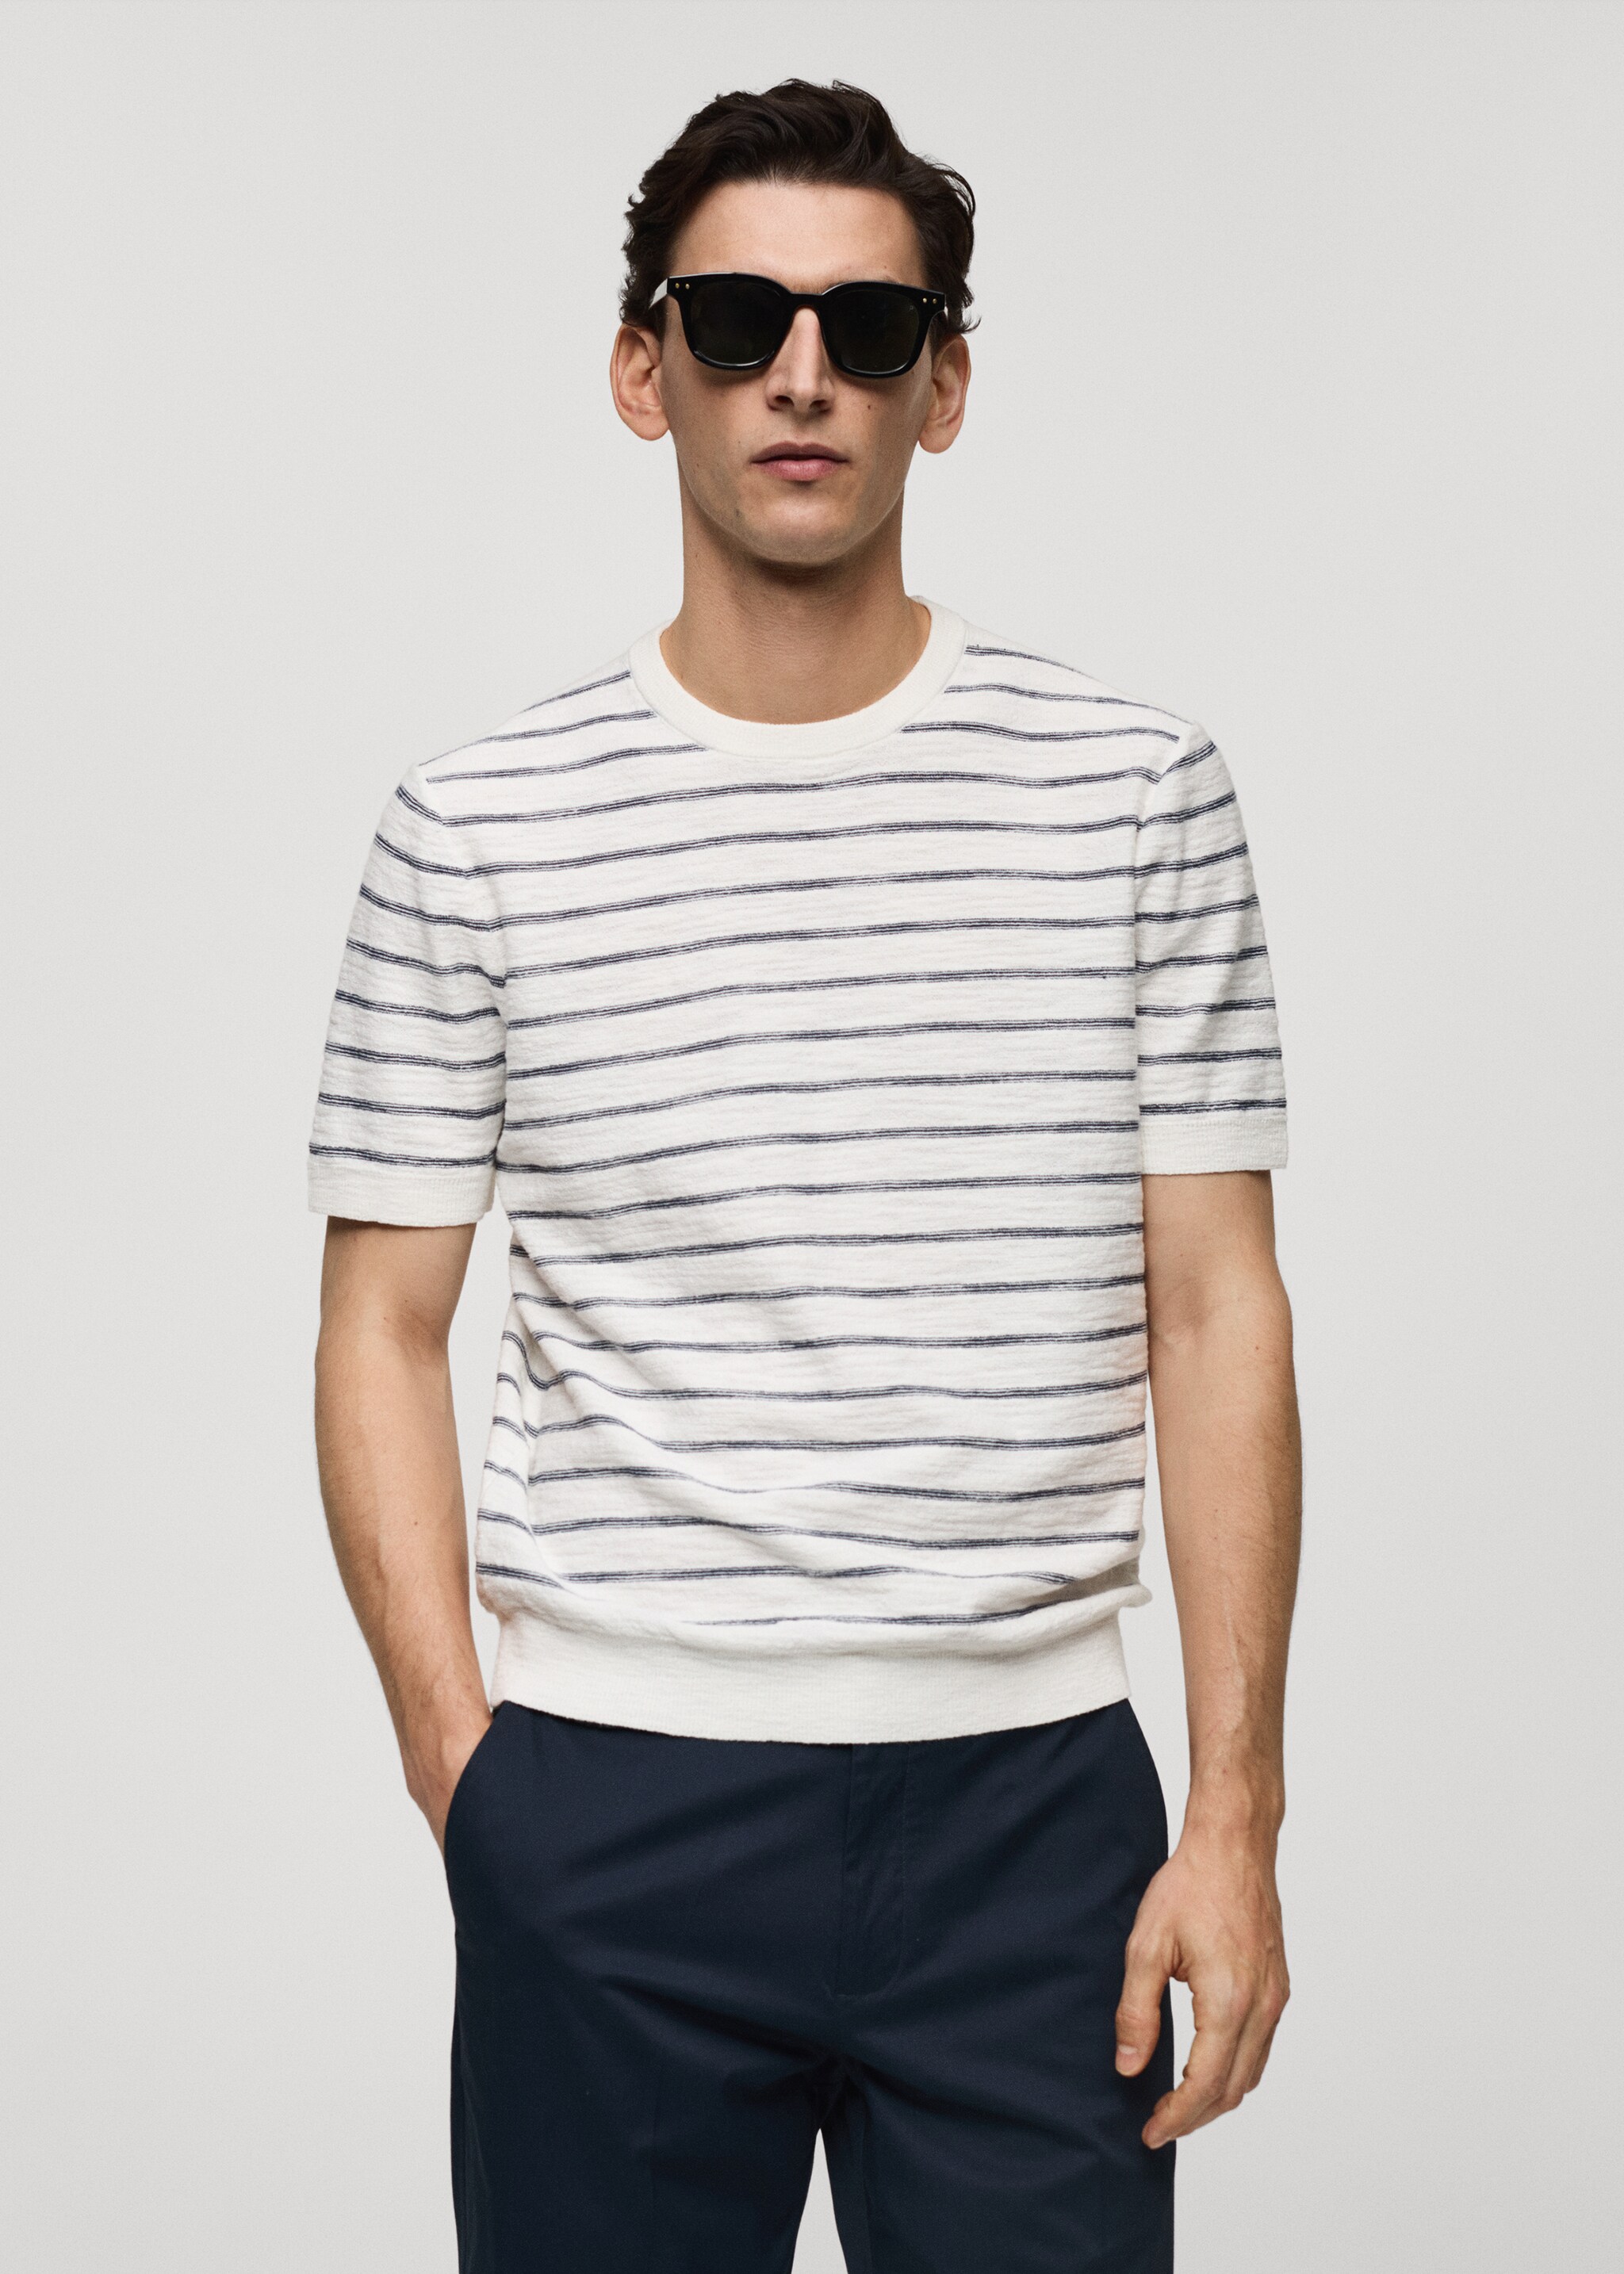 Camiseta algodón punto rayas - Plano medio